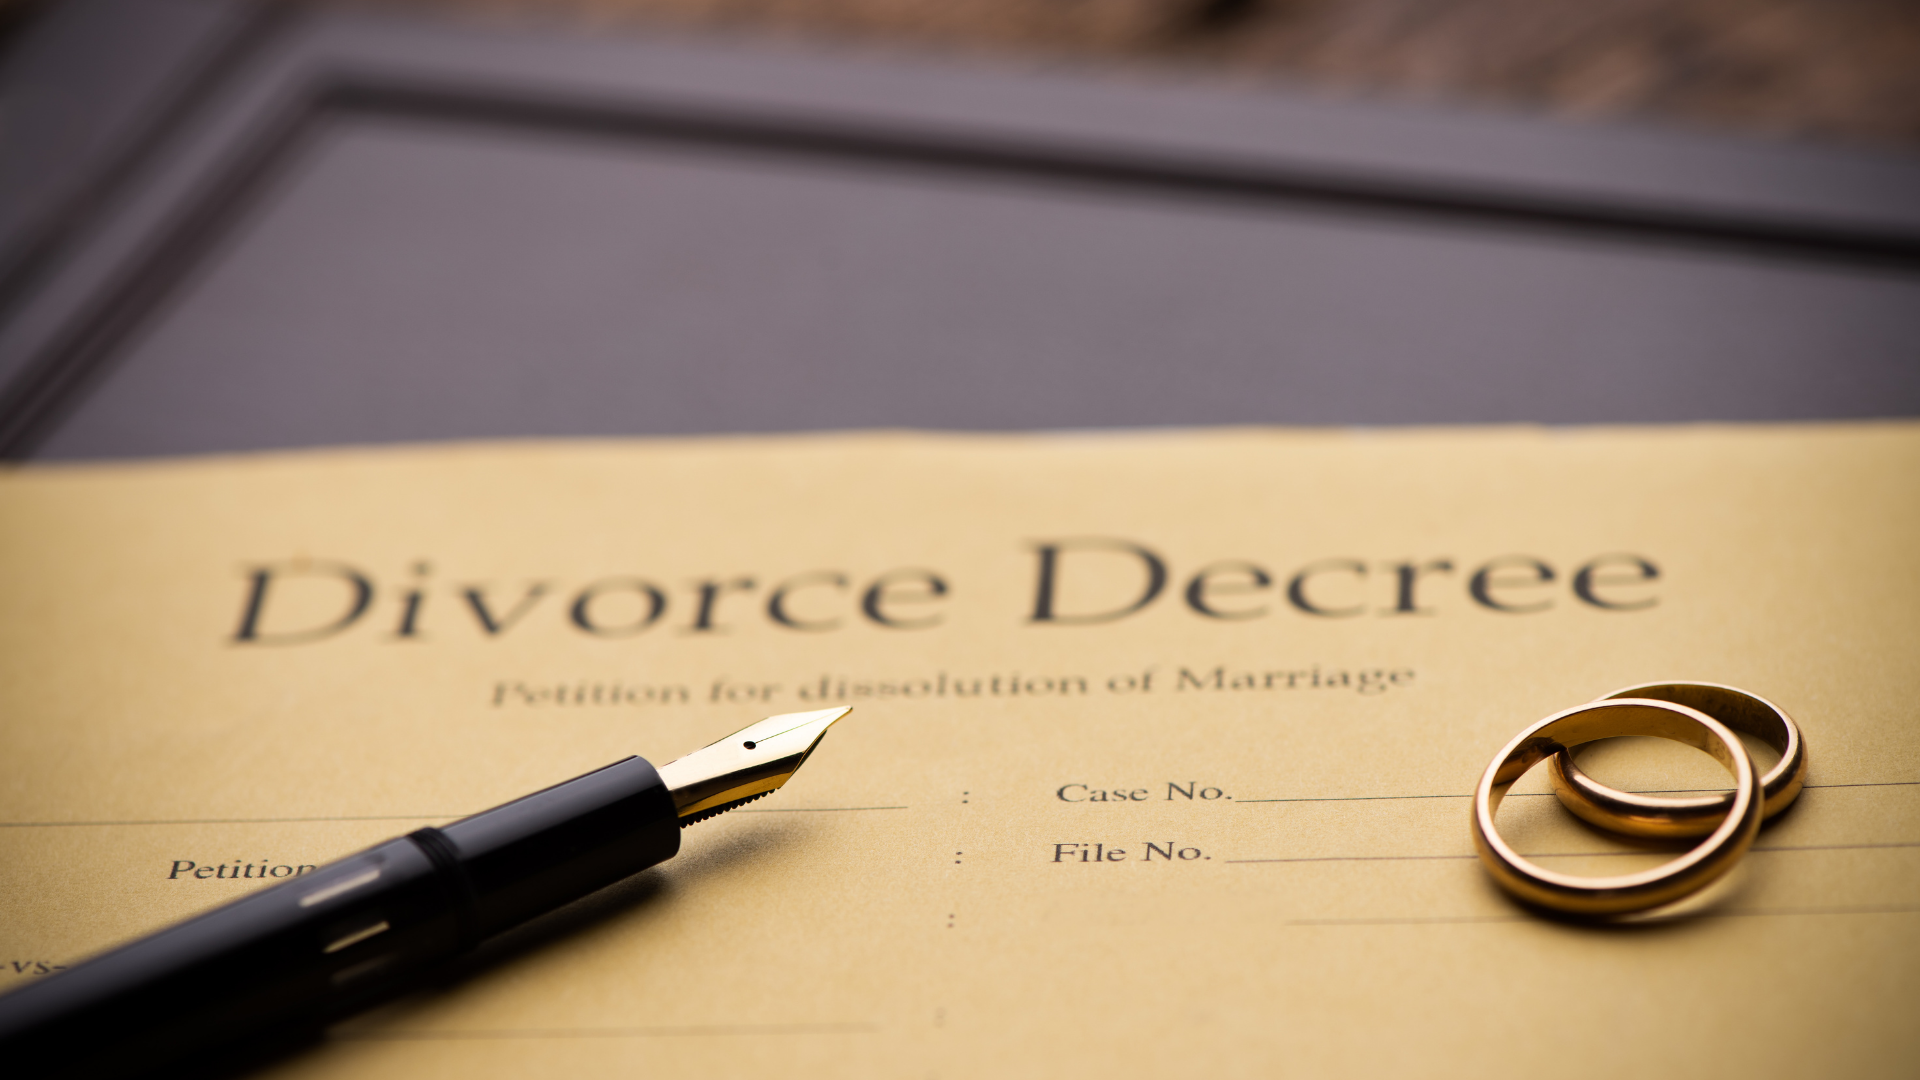 Divorce Decree Lawyers Minnesota